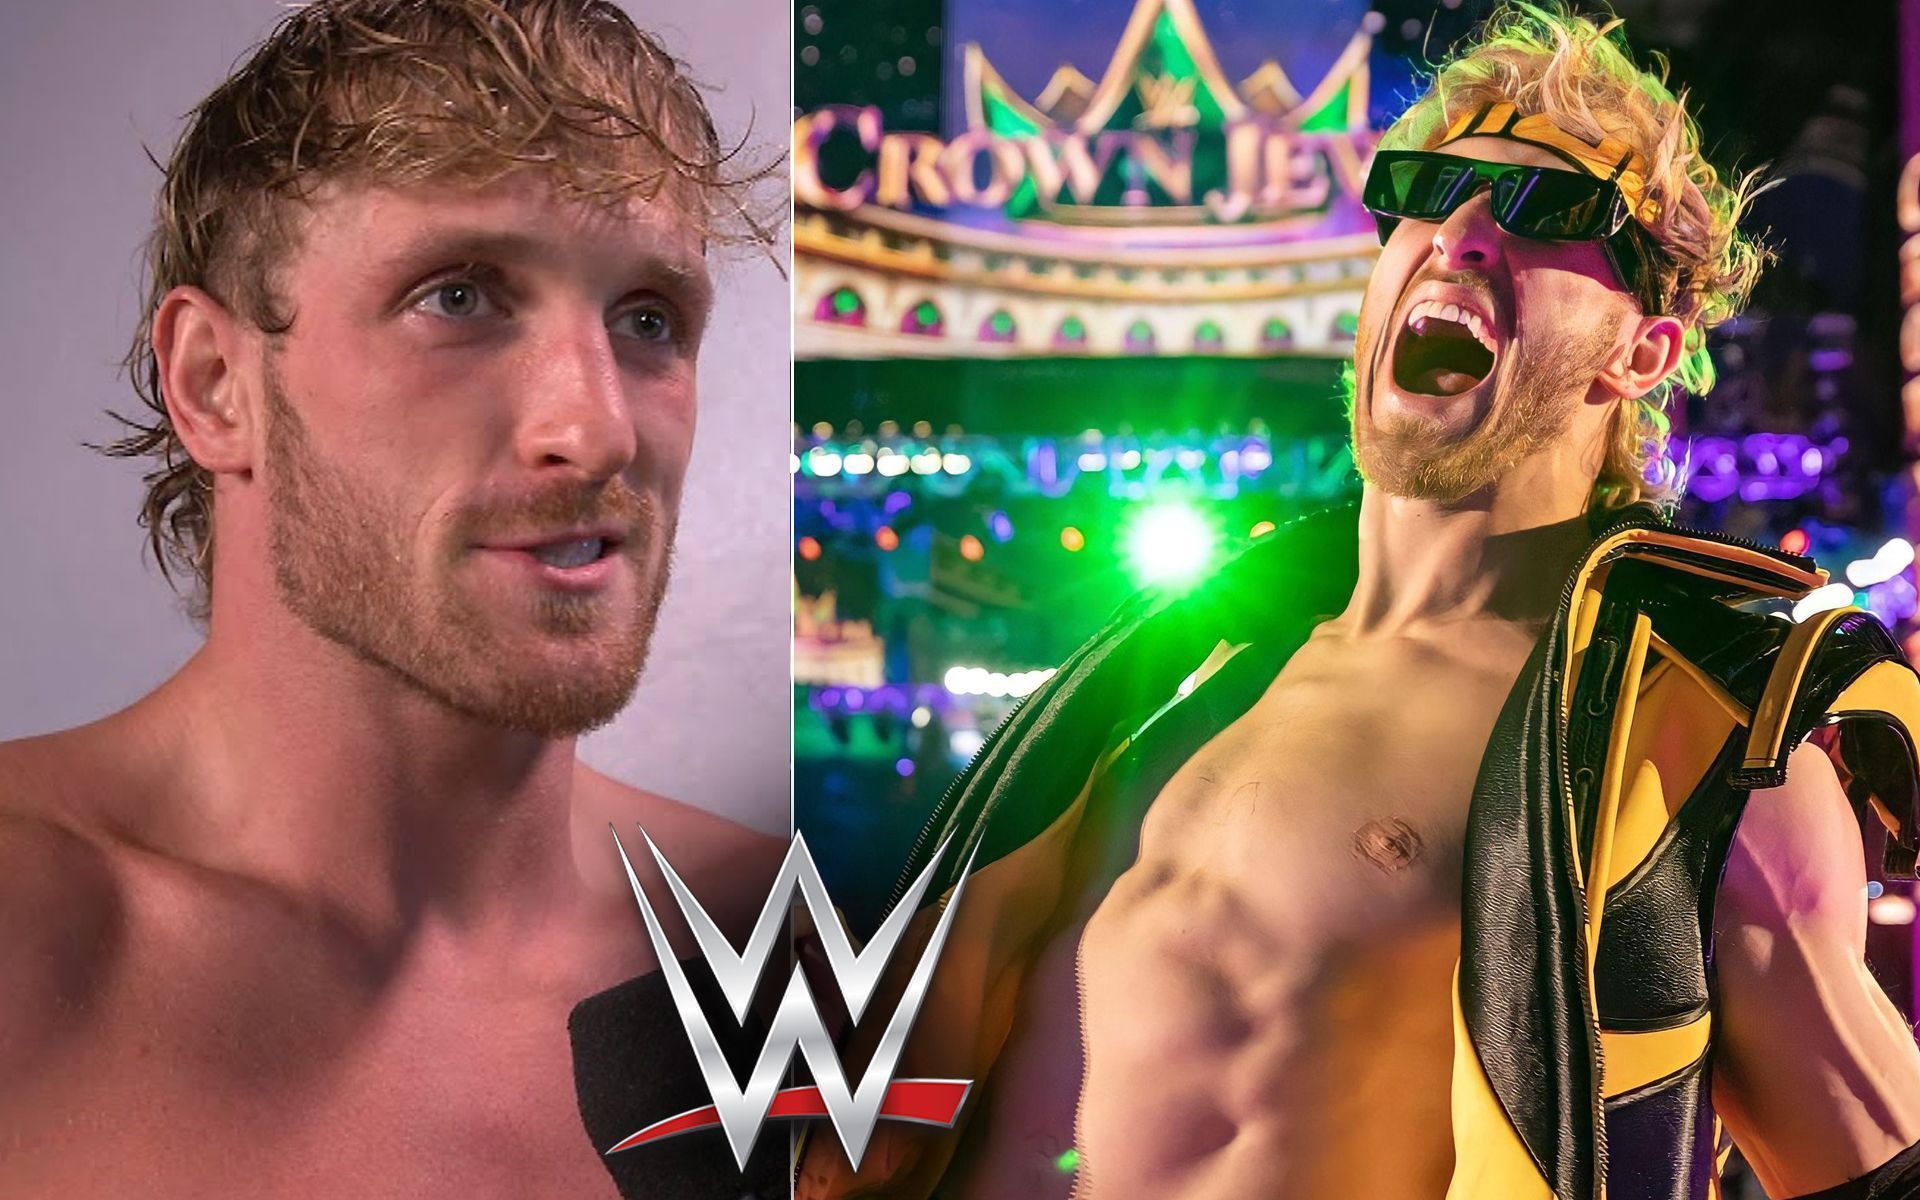 Logan Paul has impressed the WWE Universe with his impressive skills